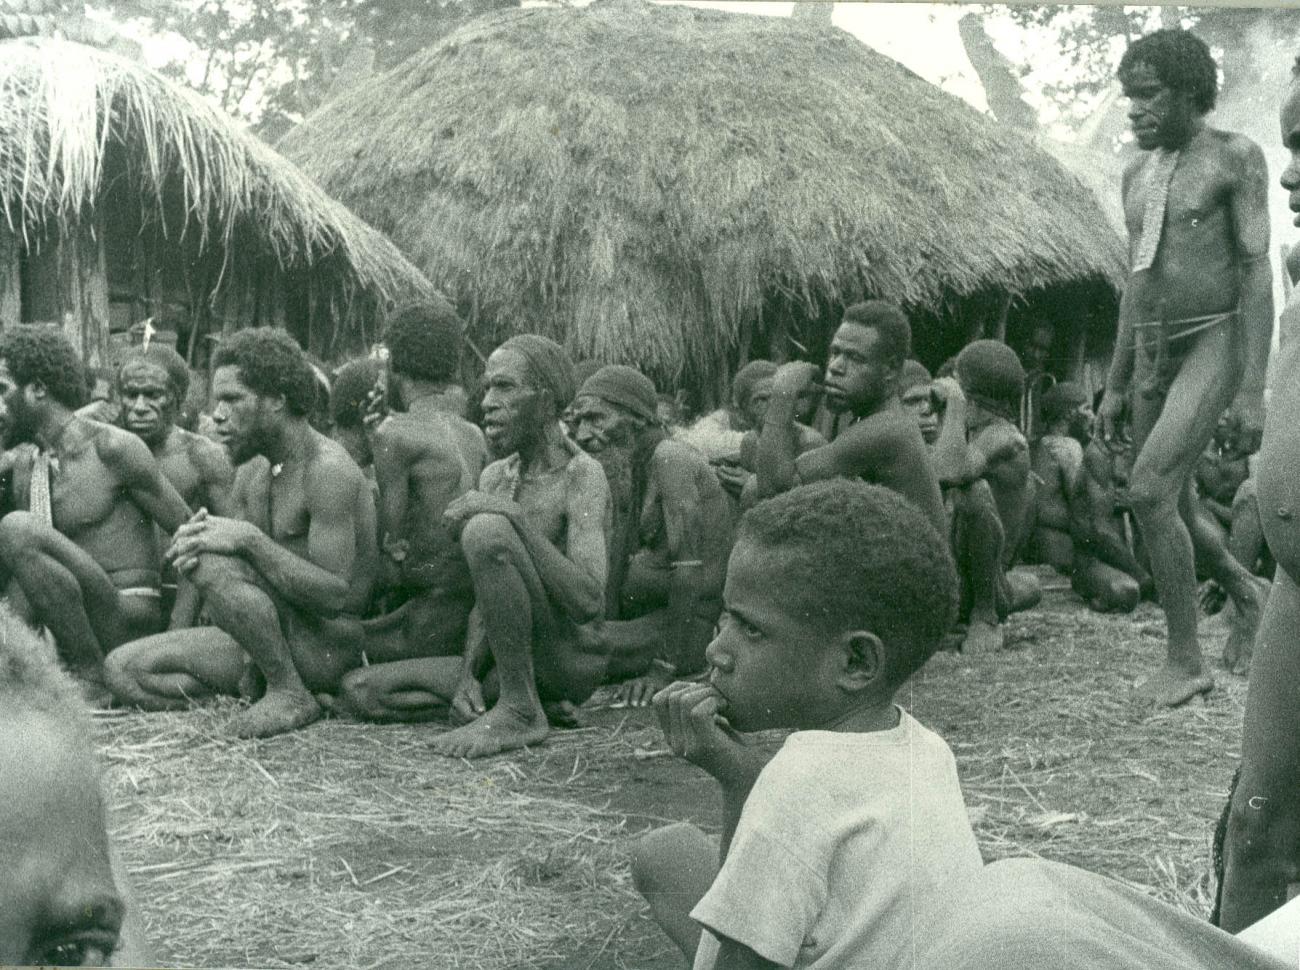 BD/40/82 - 
Sitting Mountainland inhabitants at a village
